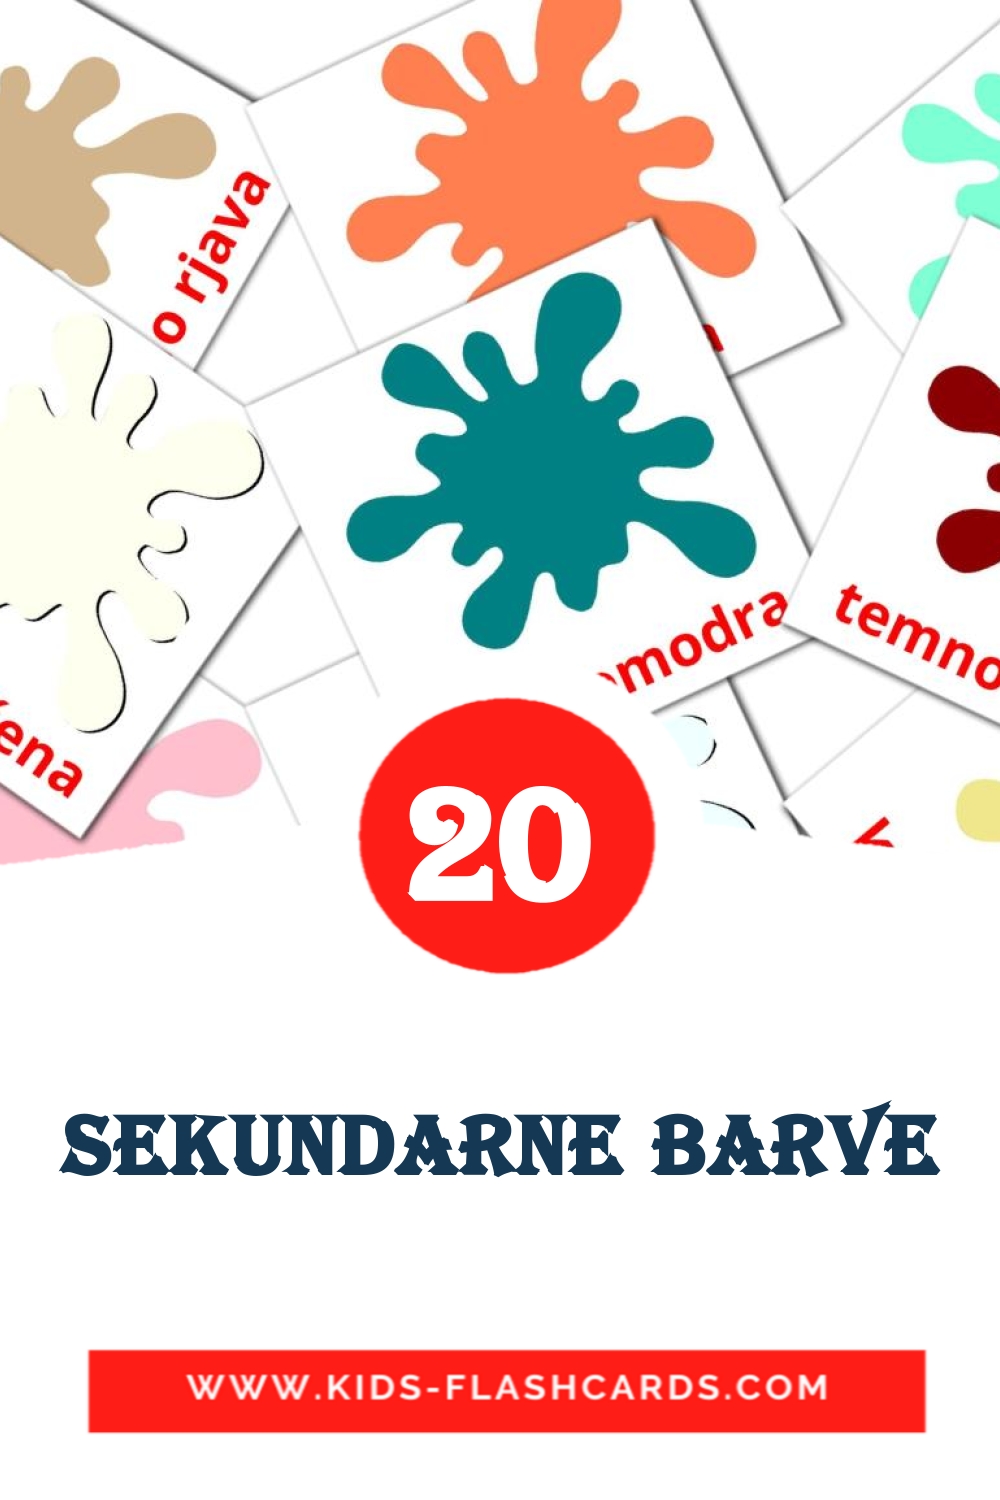 20 Sekundarne barve Picture Cards for Kindergarden in slovenian